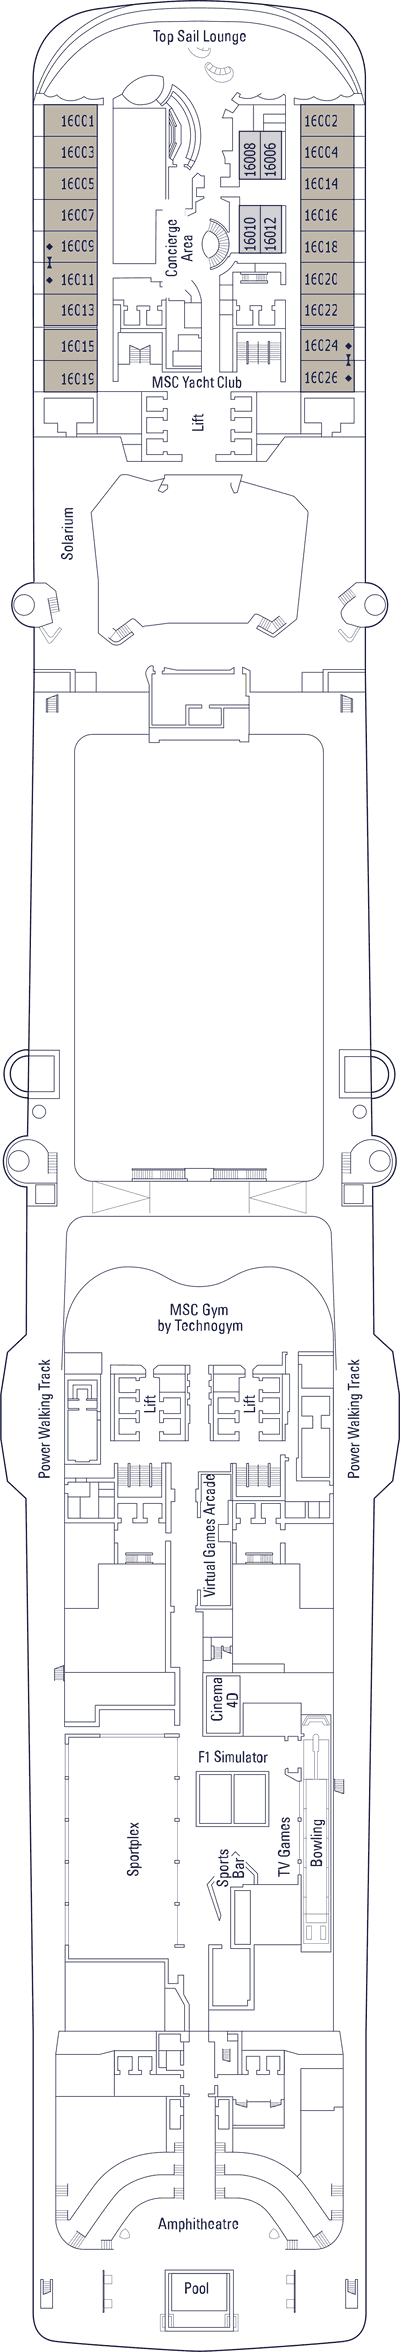 MSC Virtuosa - Decksplan Deck 16